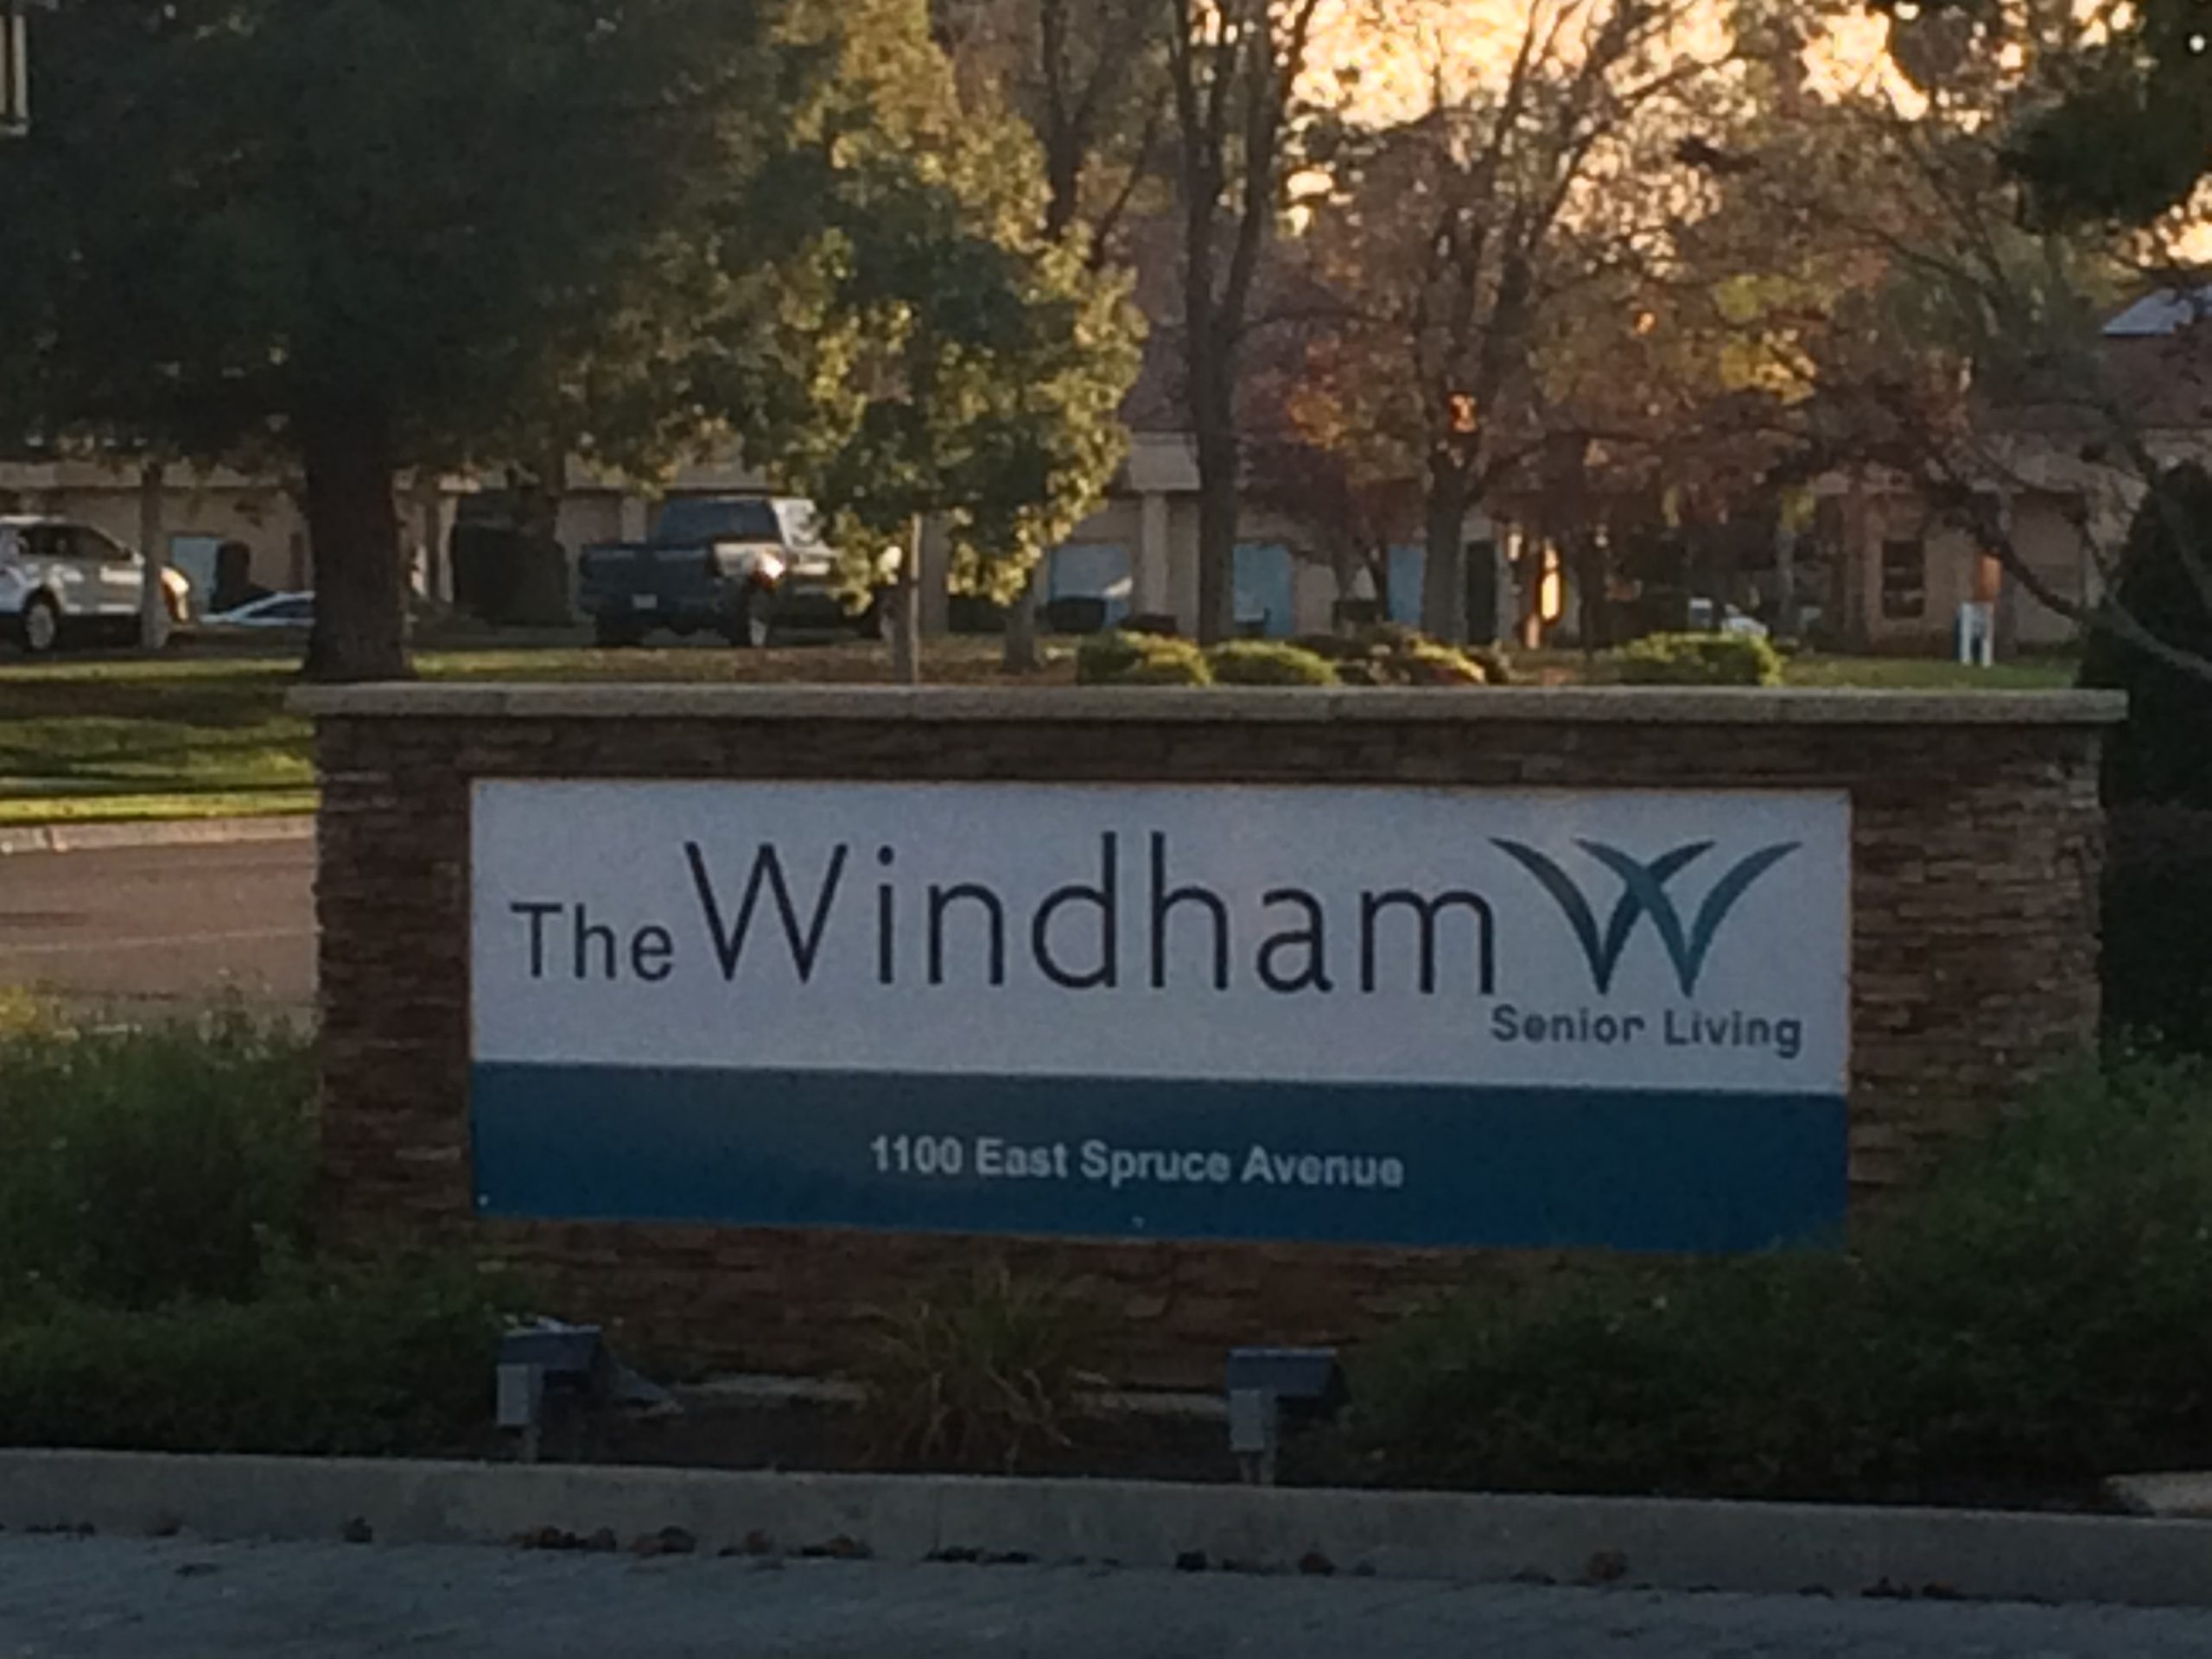 The Windham